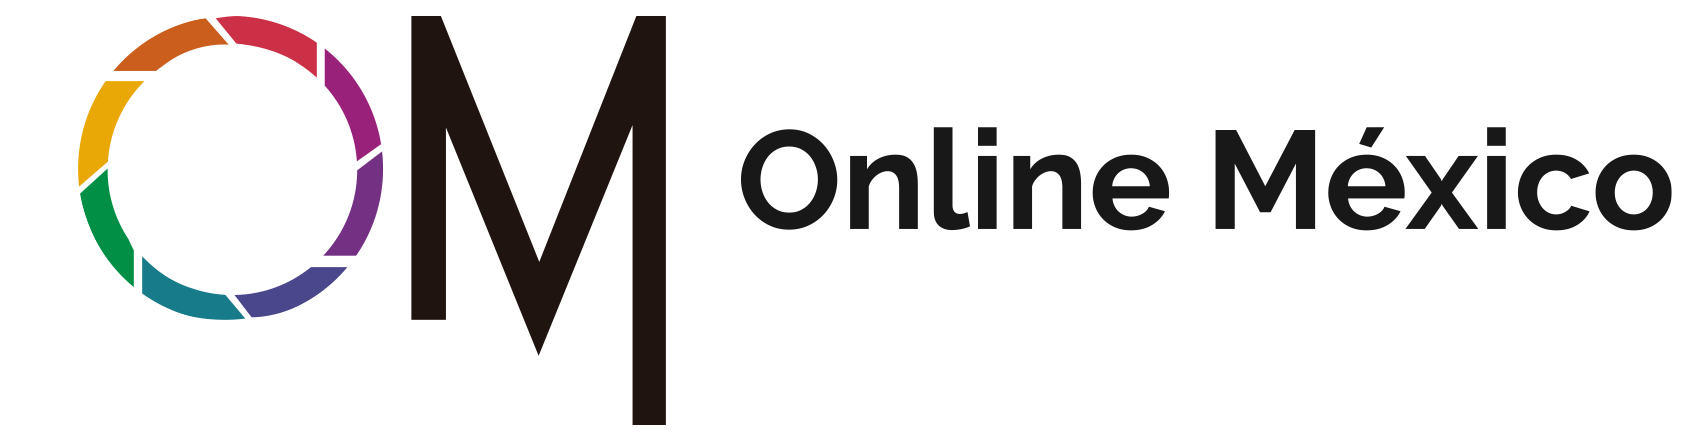 Online México - diseño web